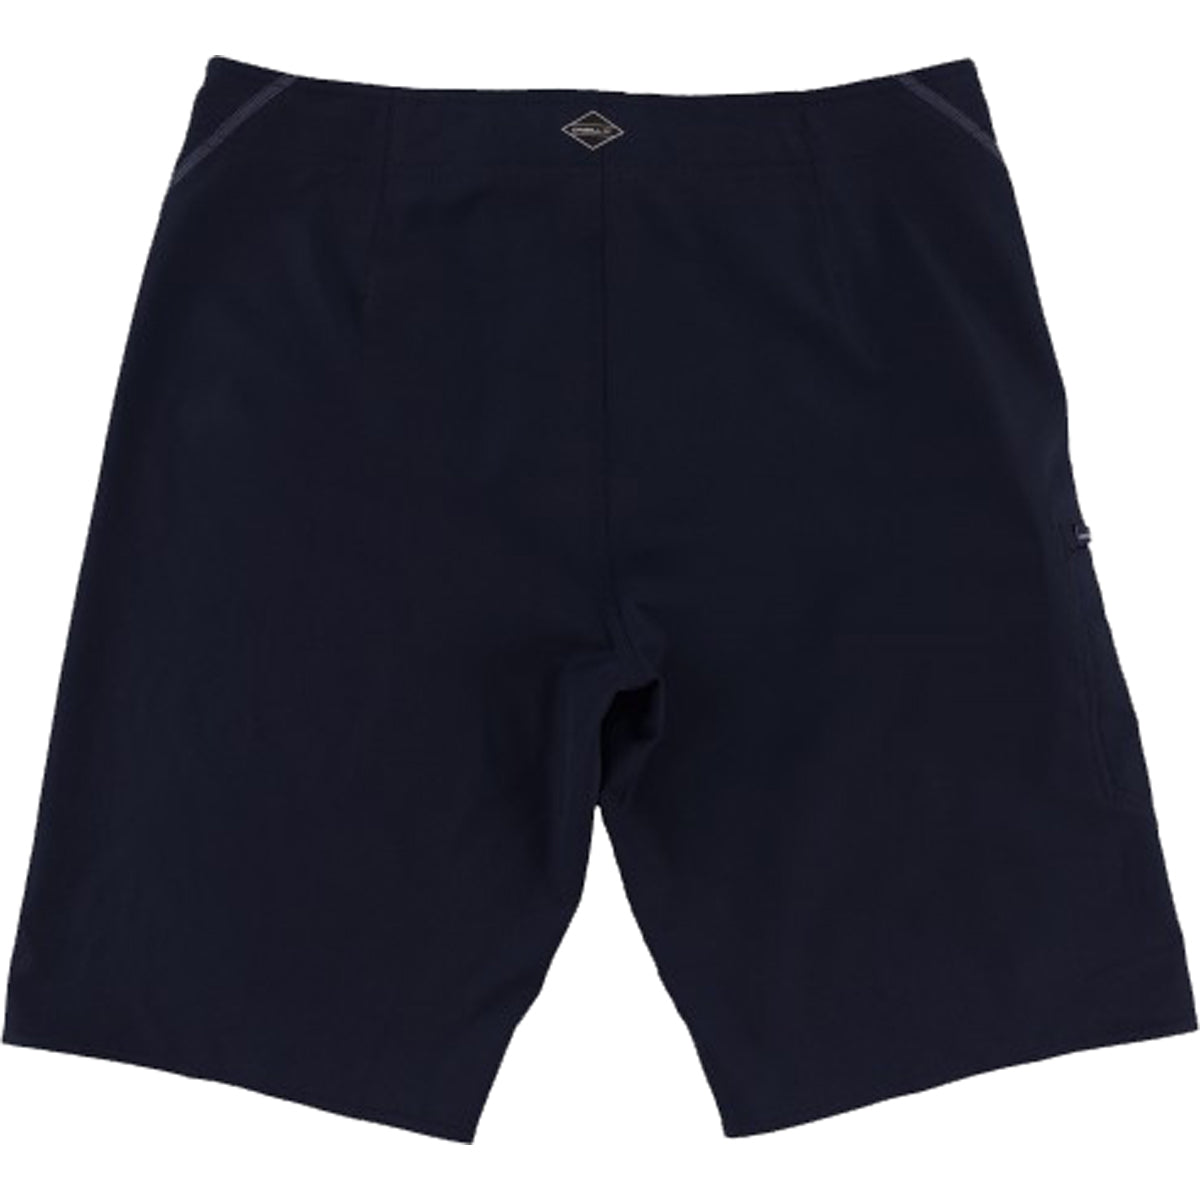 O'Neill Hyperfreak S-Seam Youth Boys Boardshort Shorts - Navy